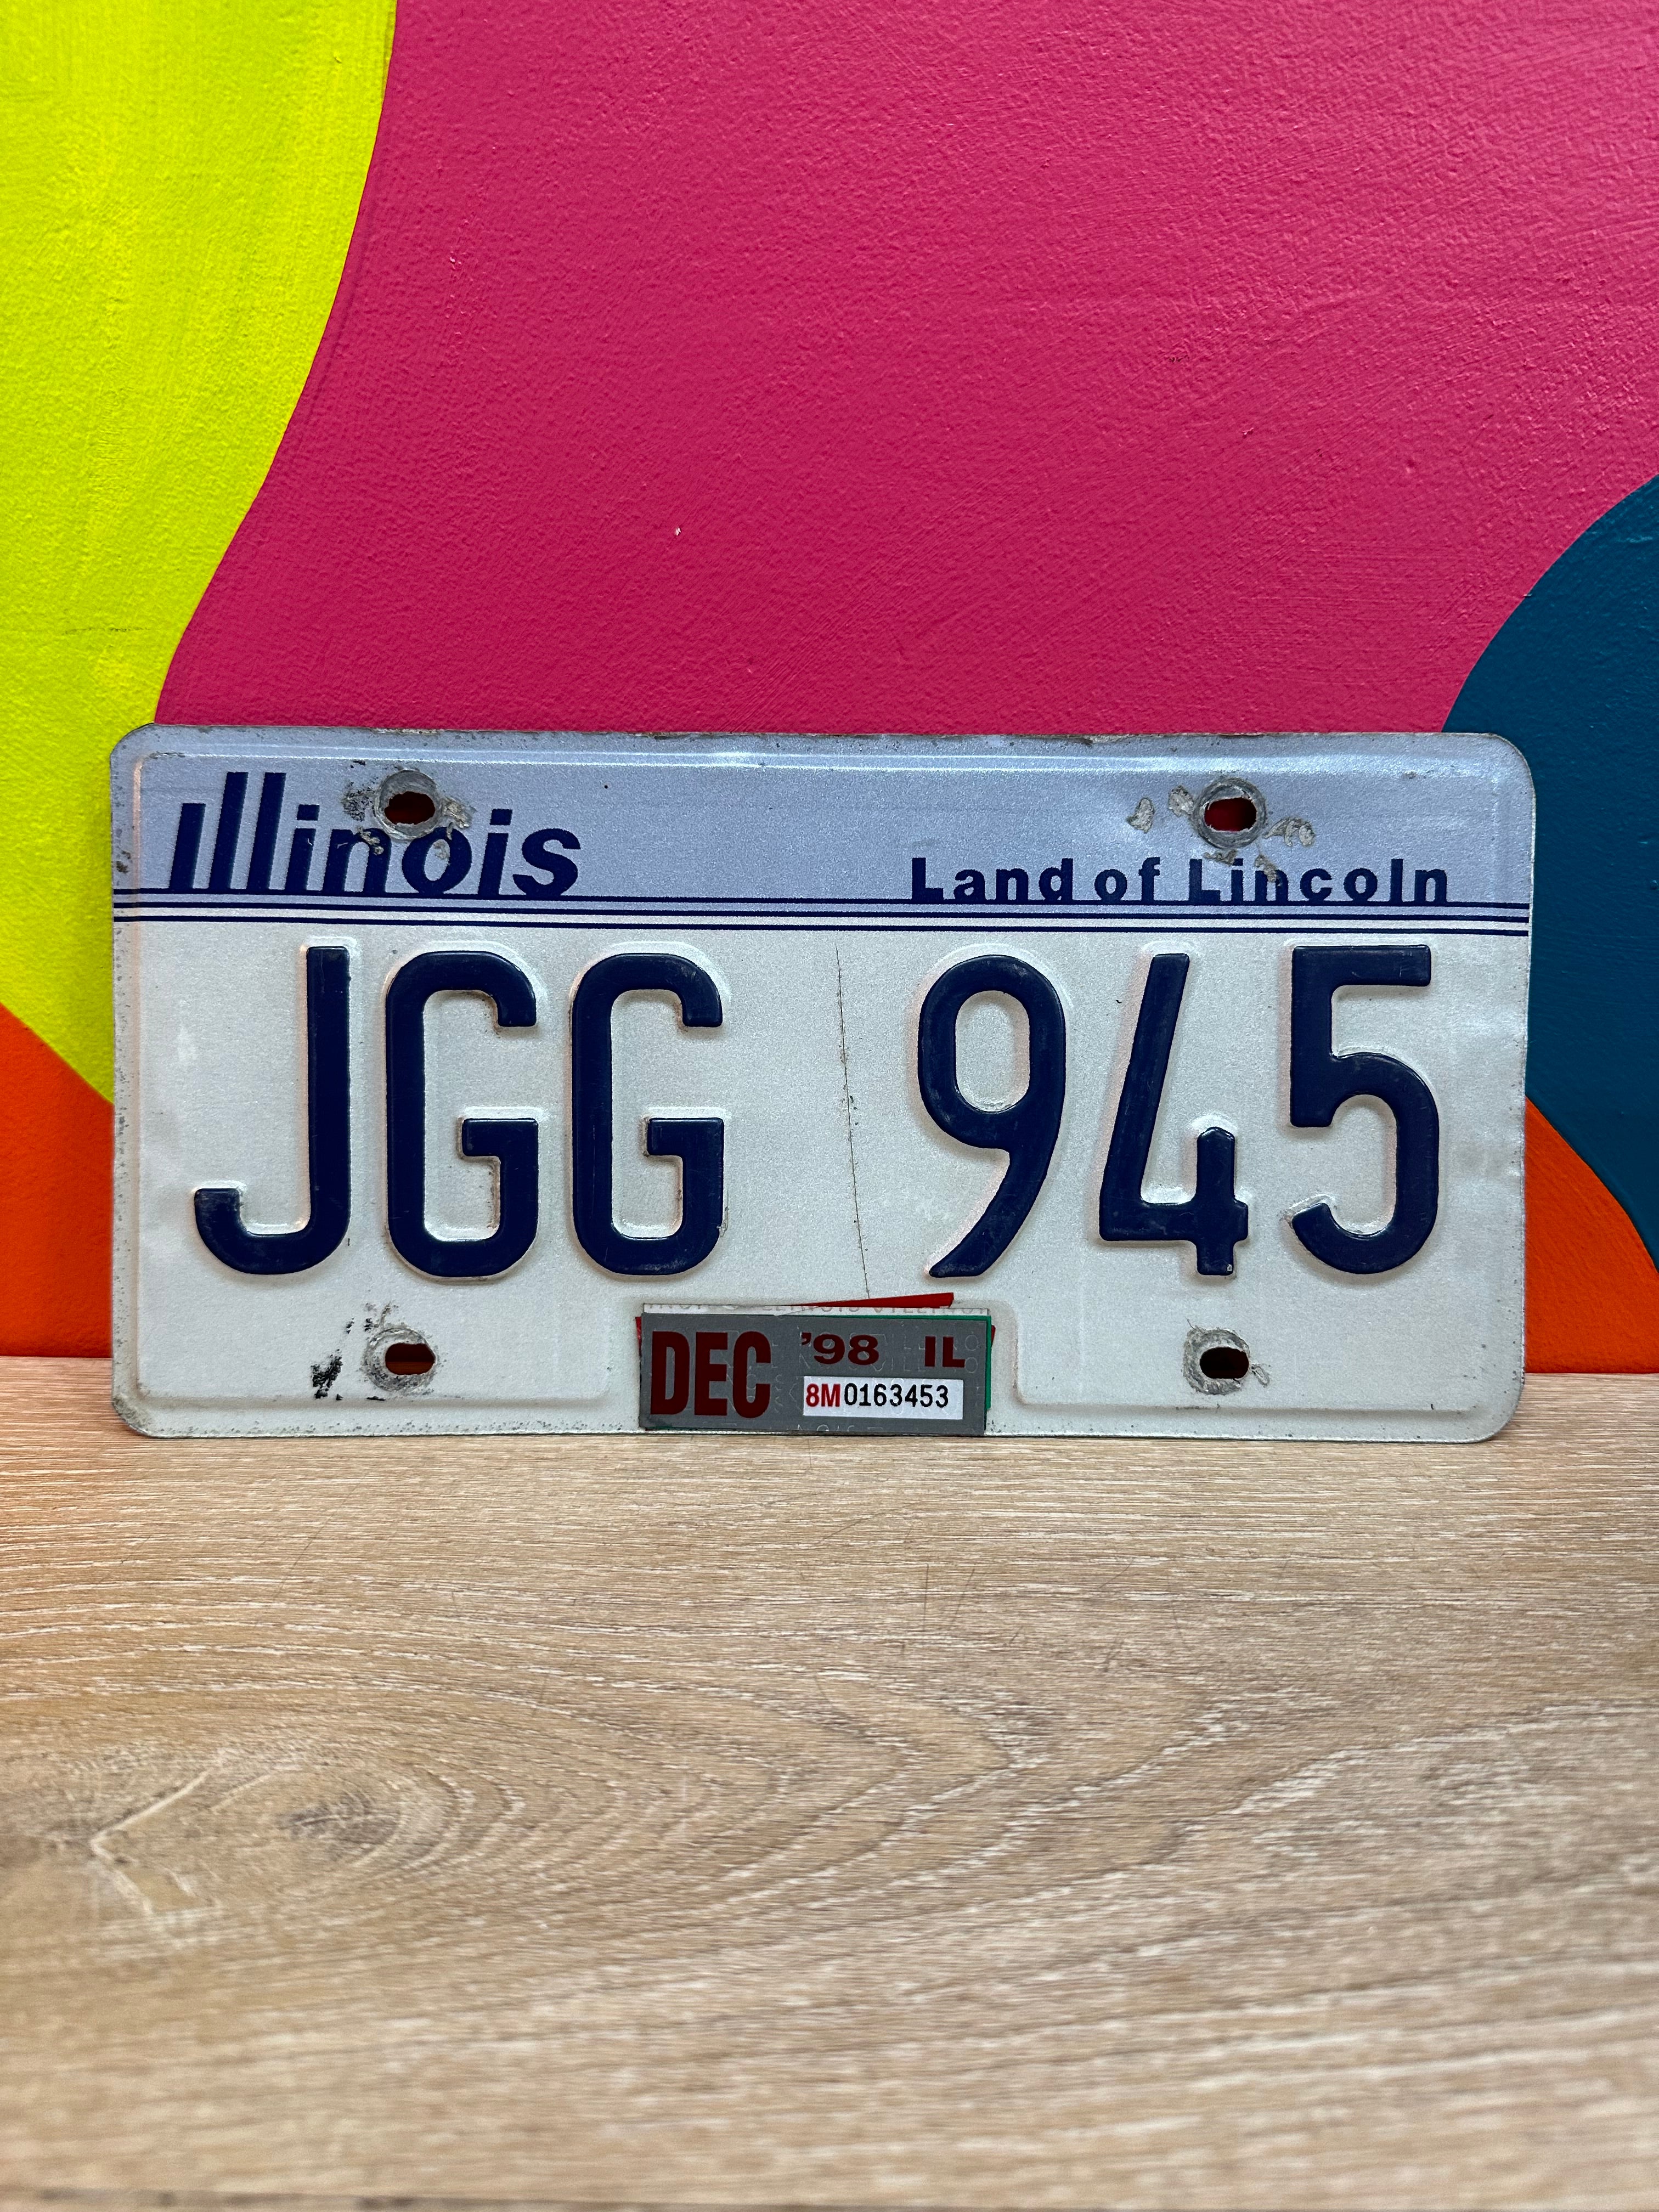 1998 Illinois License Plate